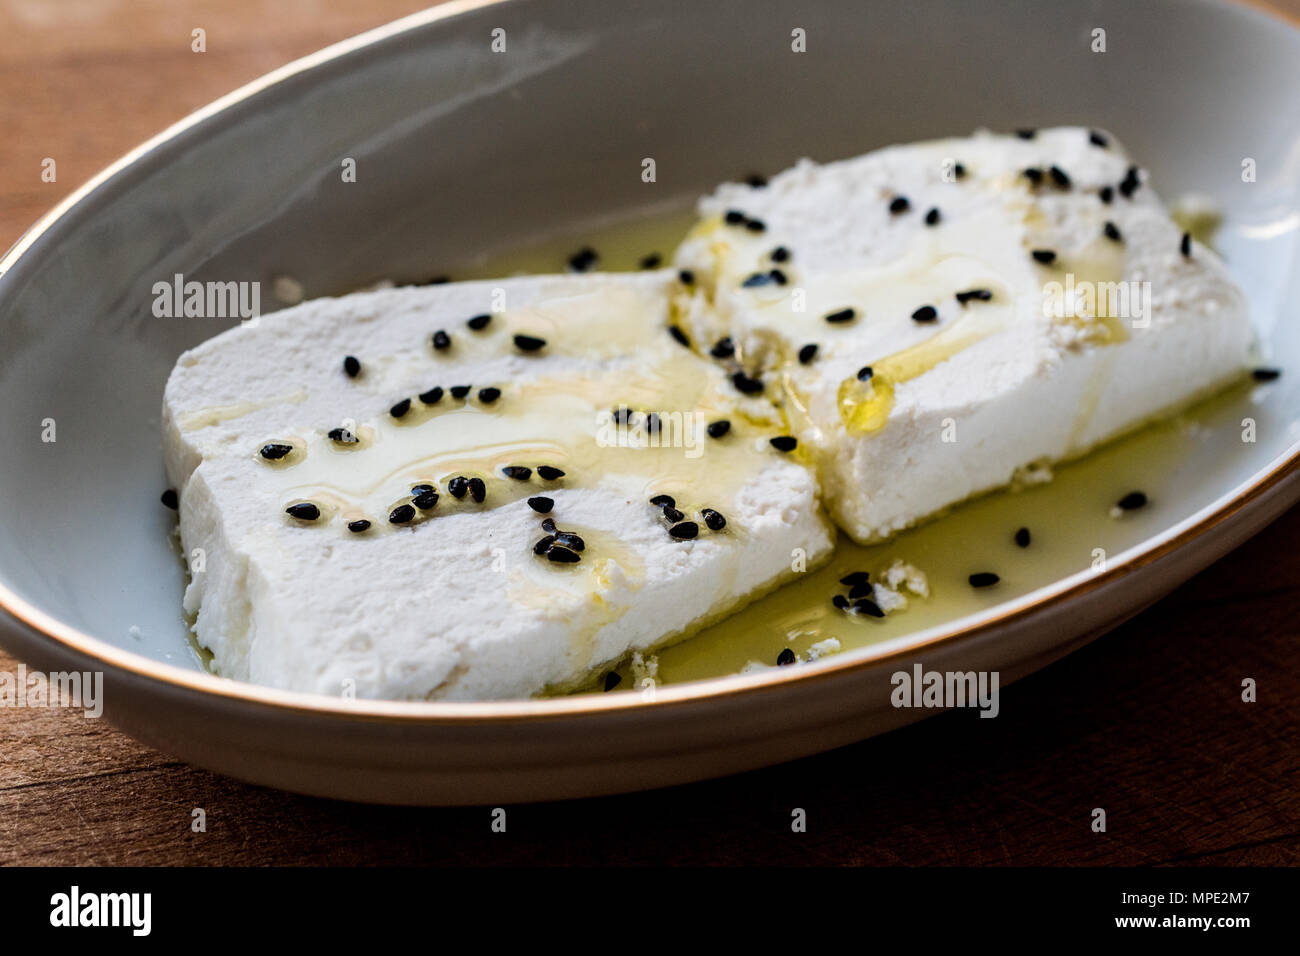 Cokelek or lor peyniri / Curd Cheese with olive oil and black cumin. Organic Food. Stock Photo